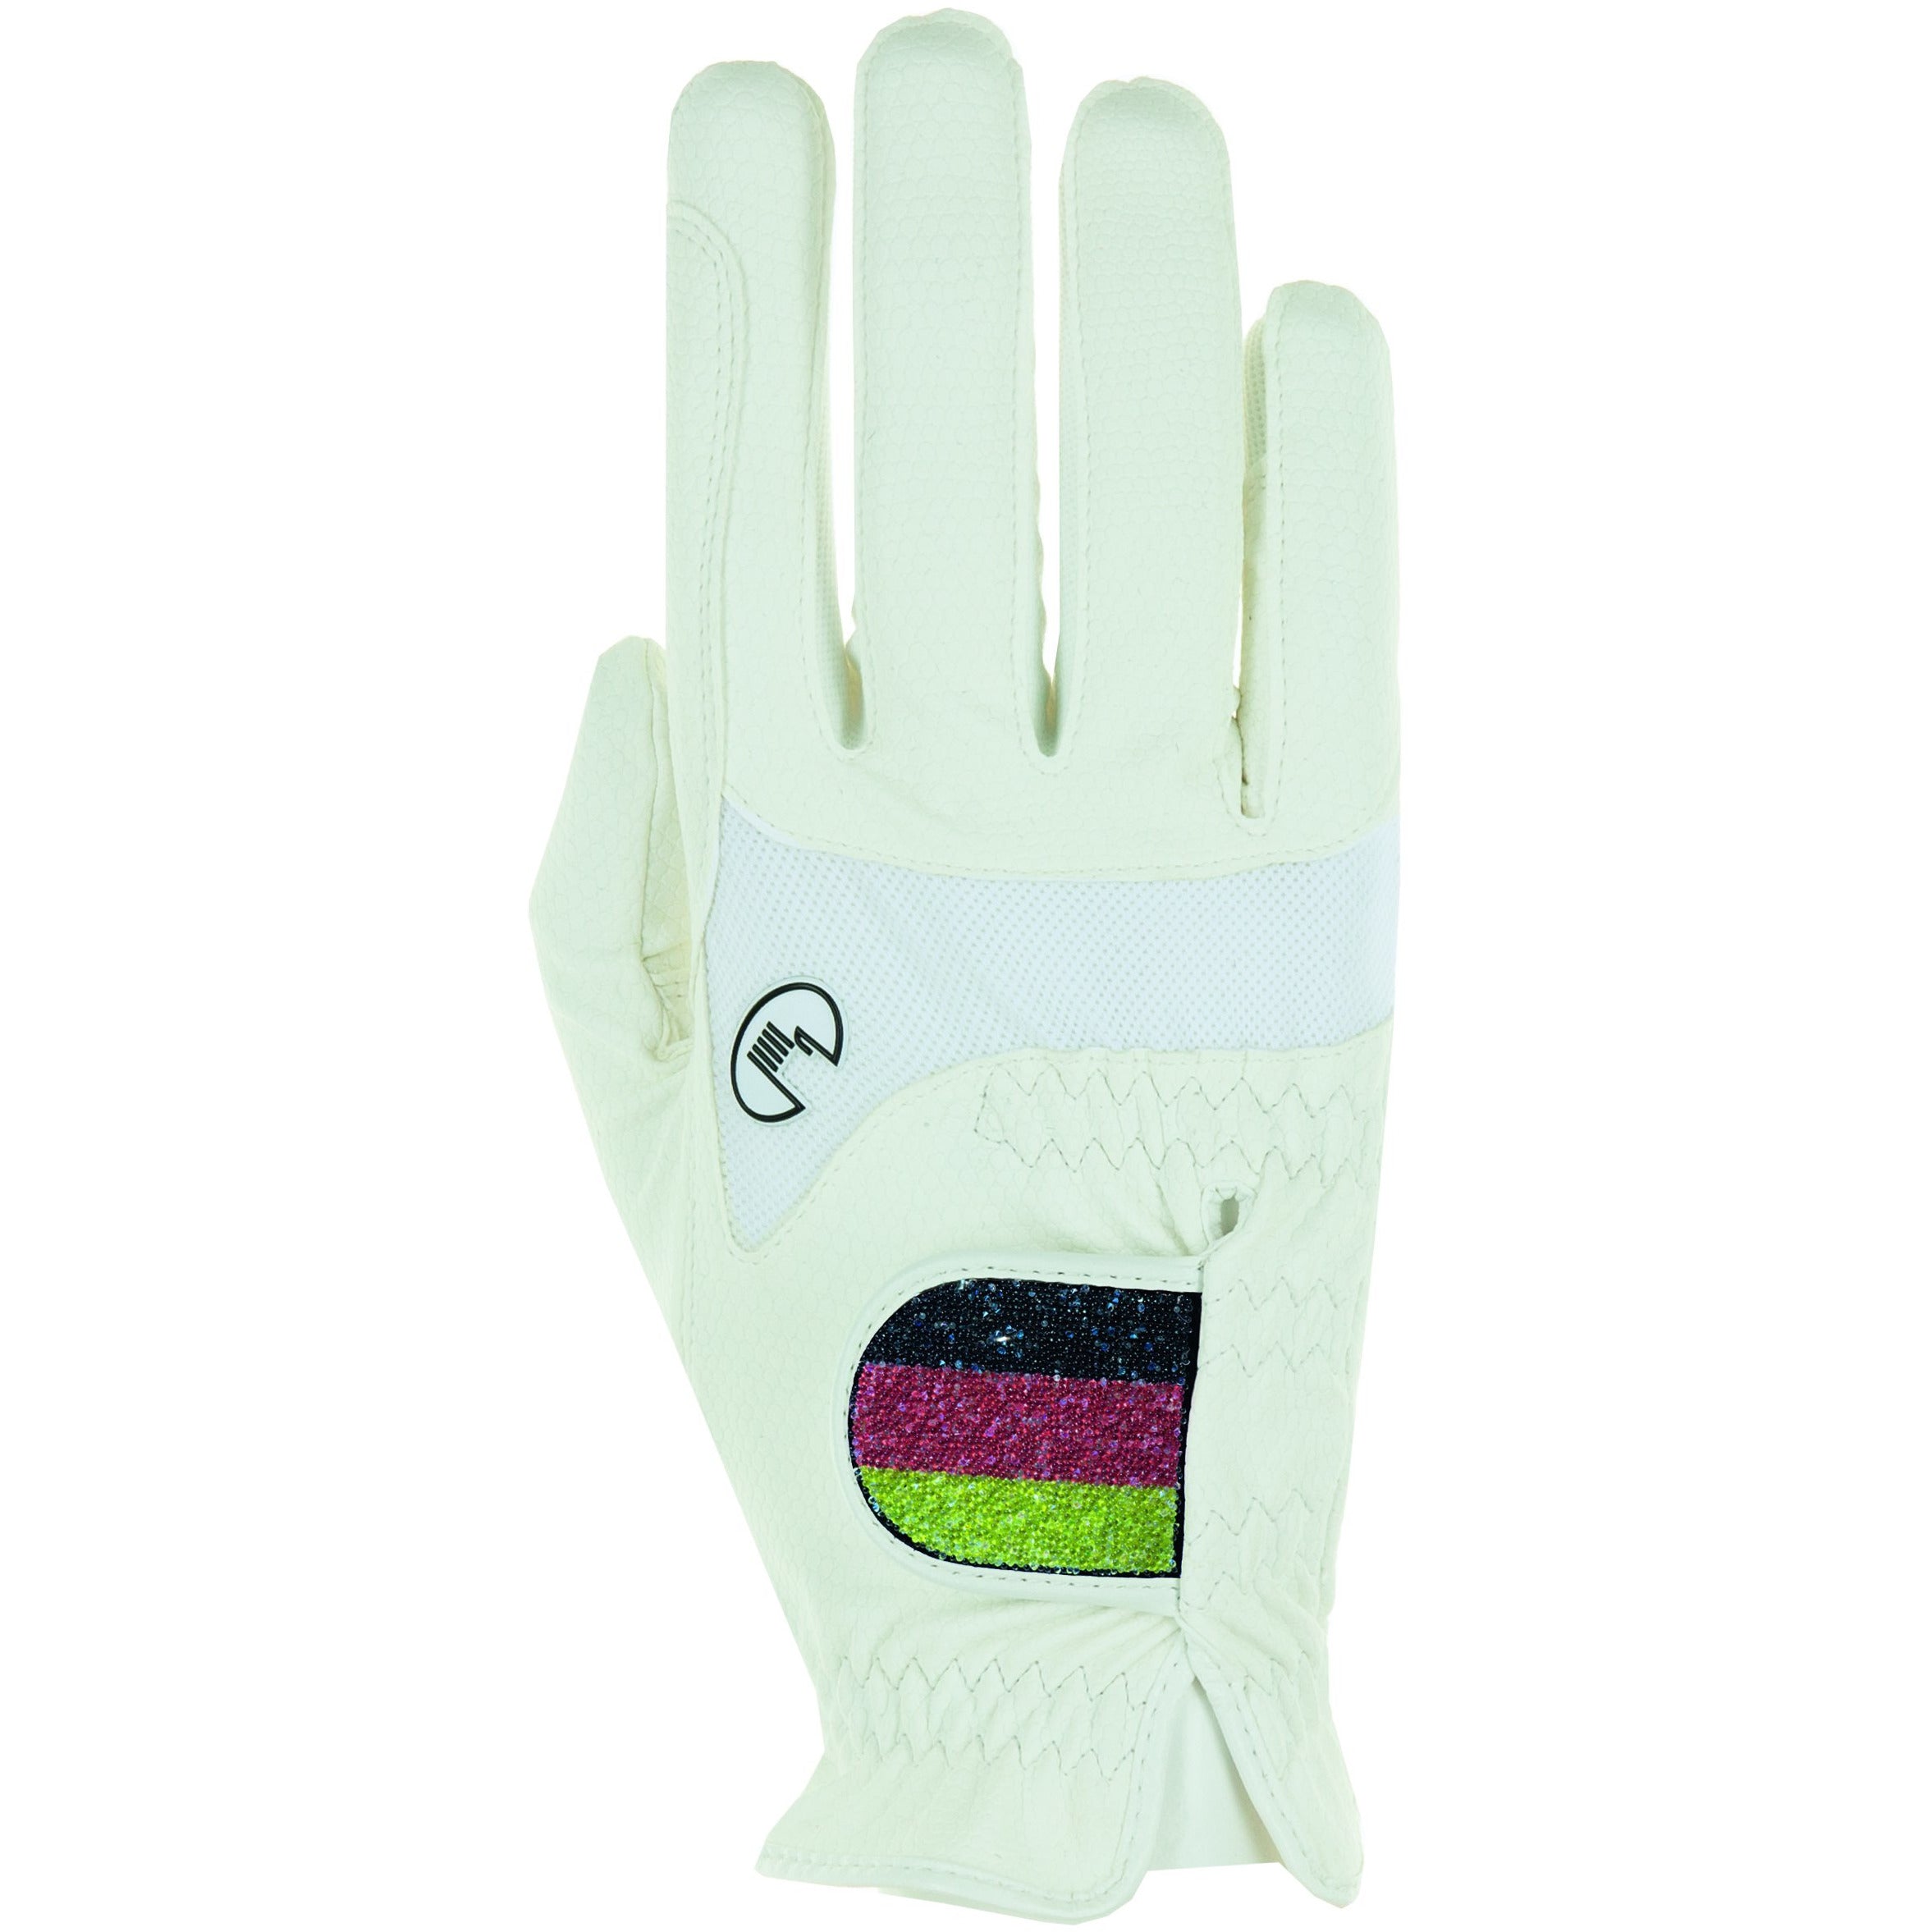 Roeckl Maryland Glove - German